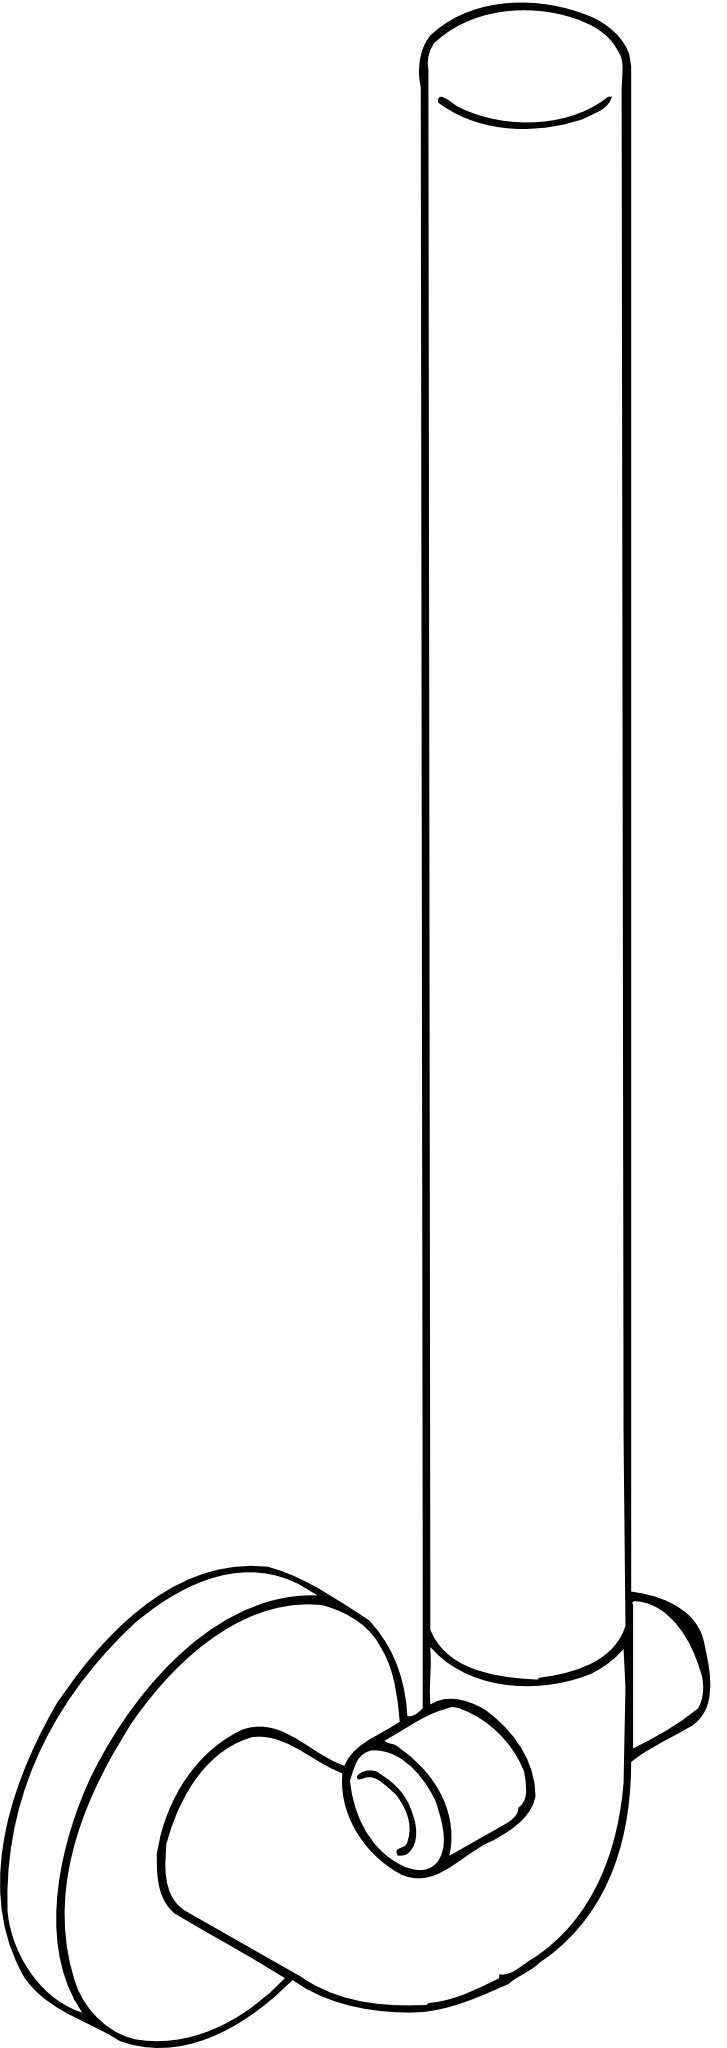 HEWI Reservetoilettenpapierhalter „Serie 801“ 7 × 9,2 × 39,3 cm